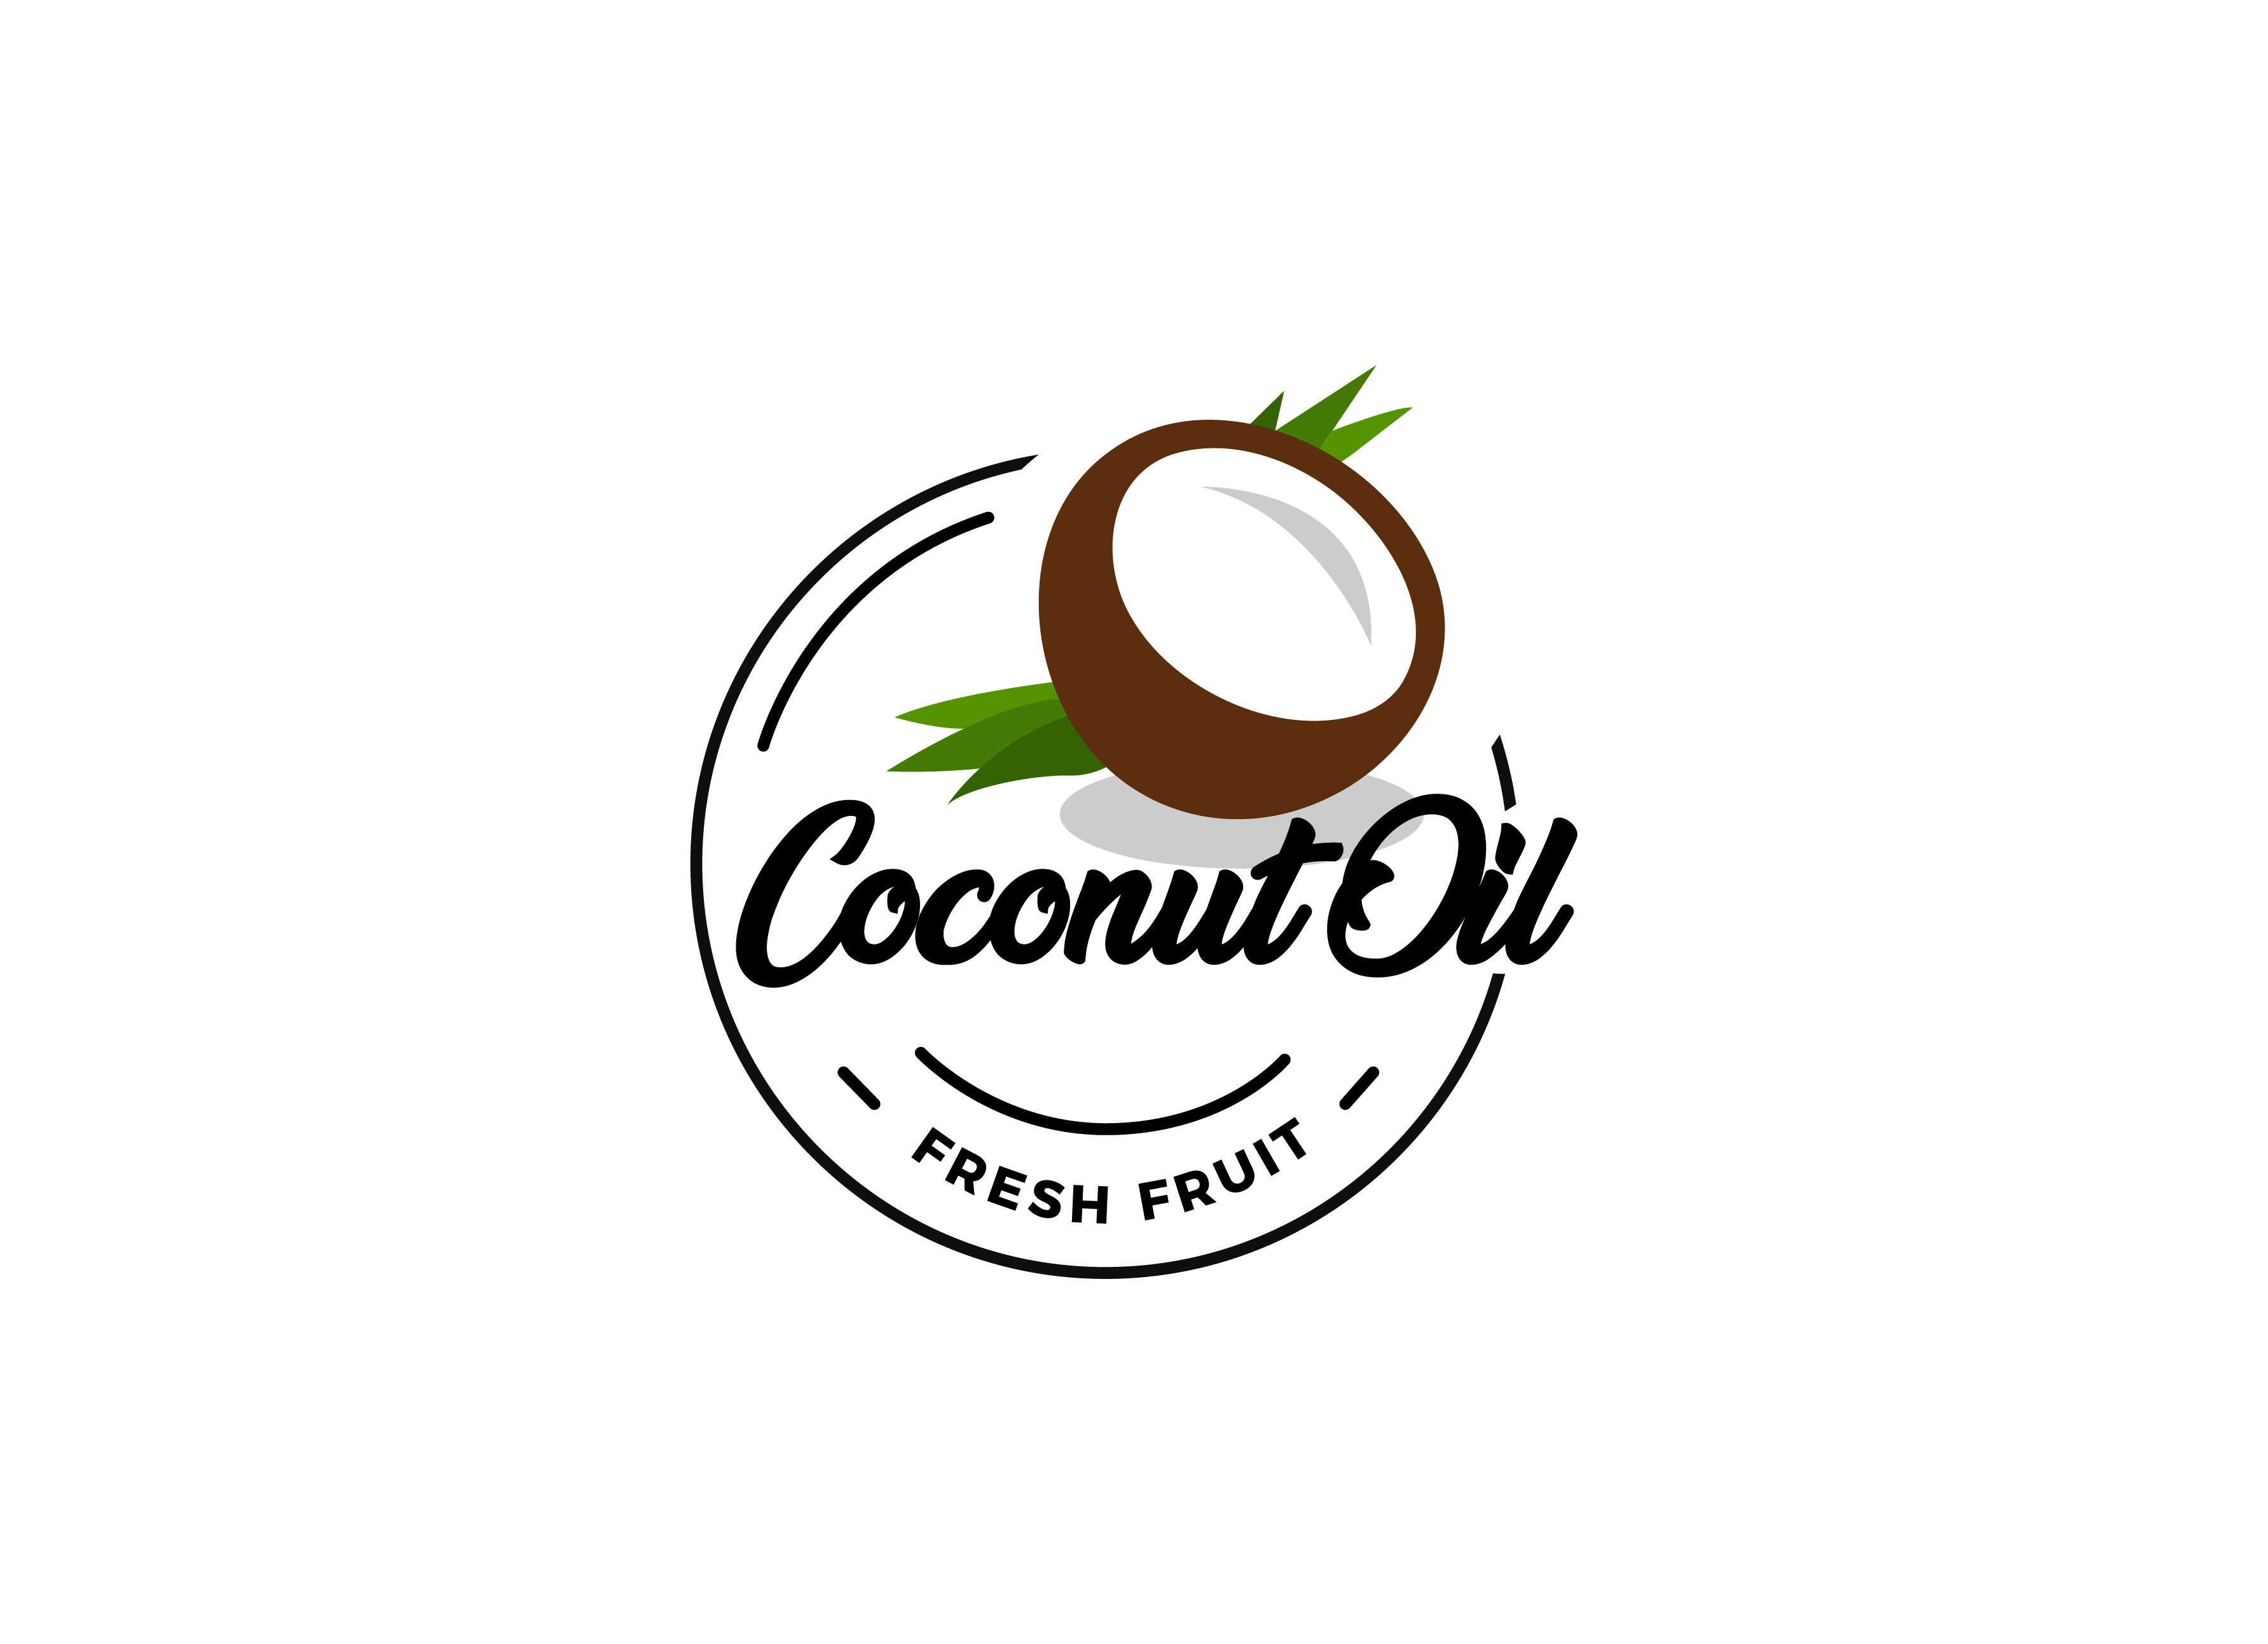 Coconut Oil Fresh Fruit Logo Graphic by Alvin Creative · Creative Fabrica